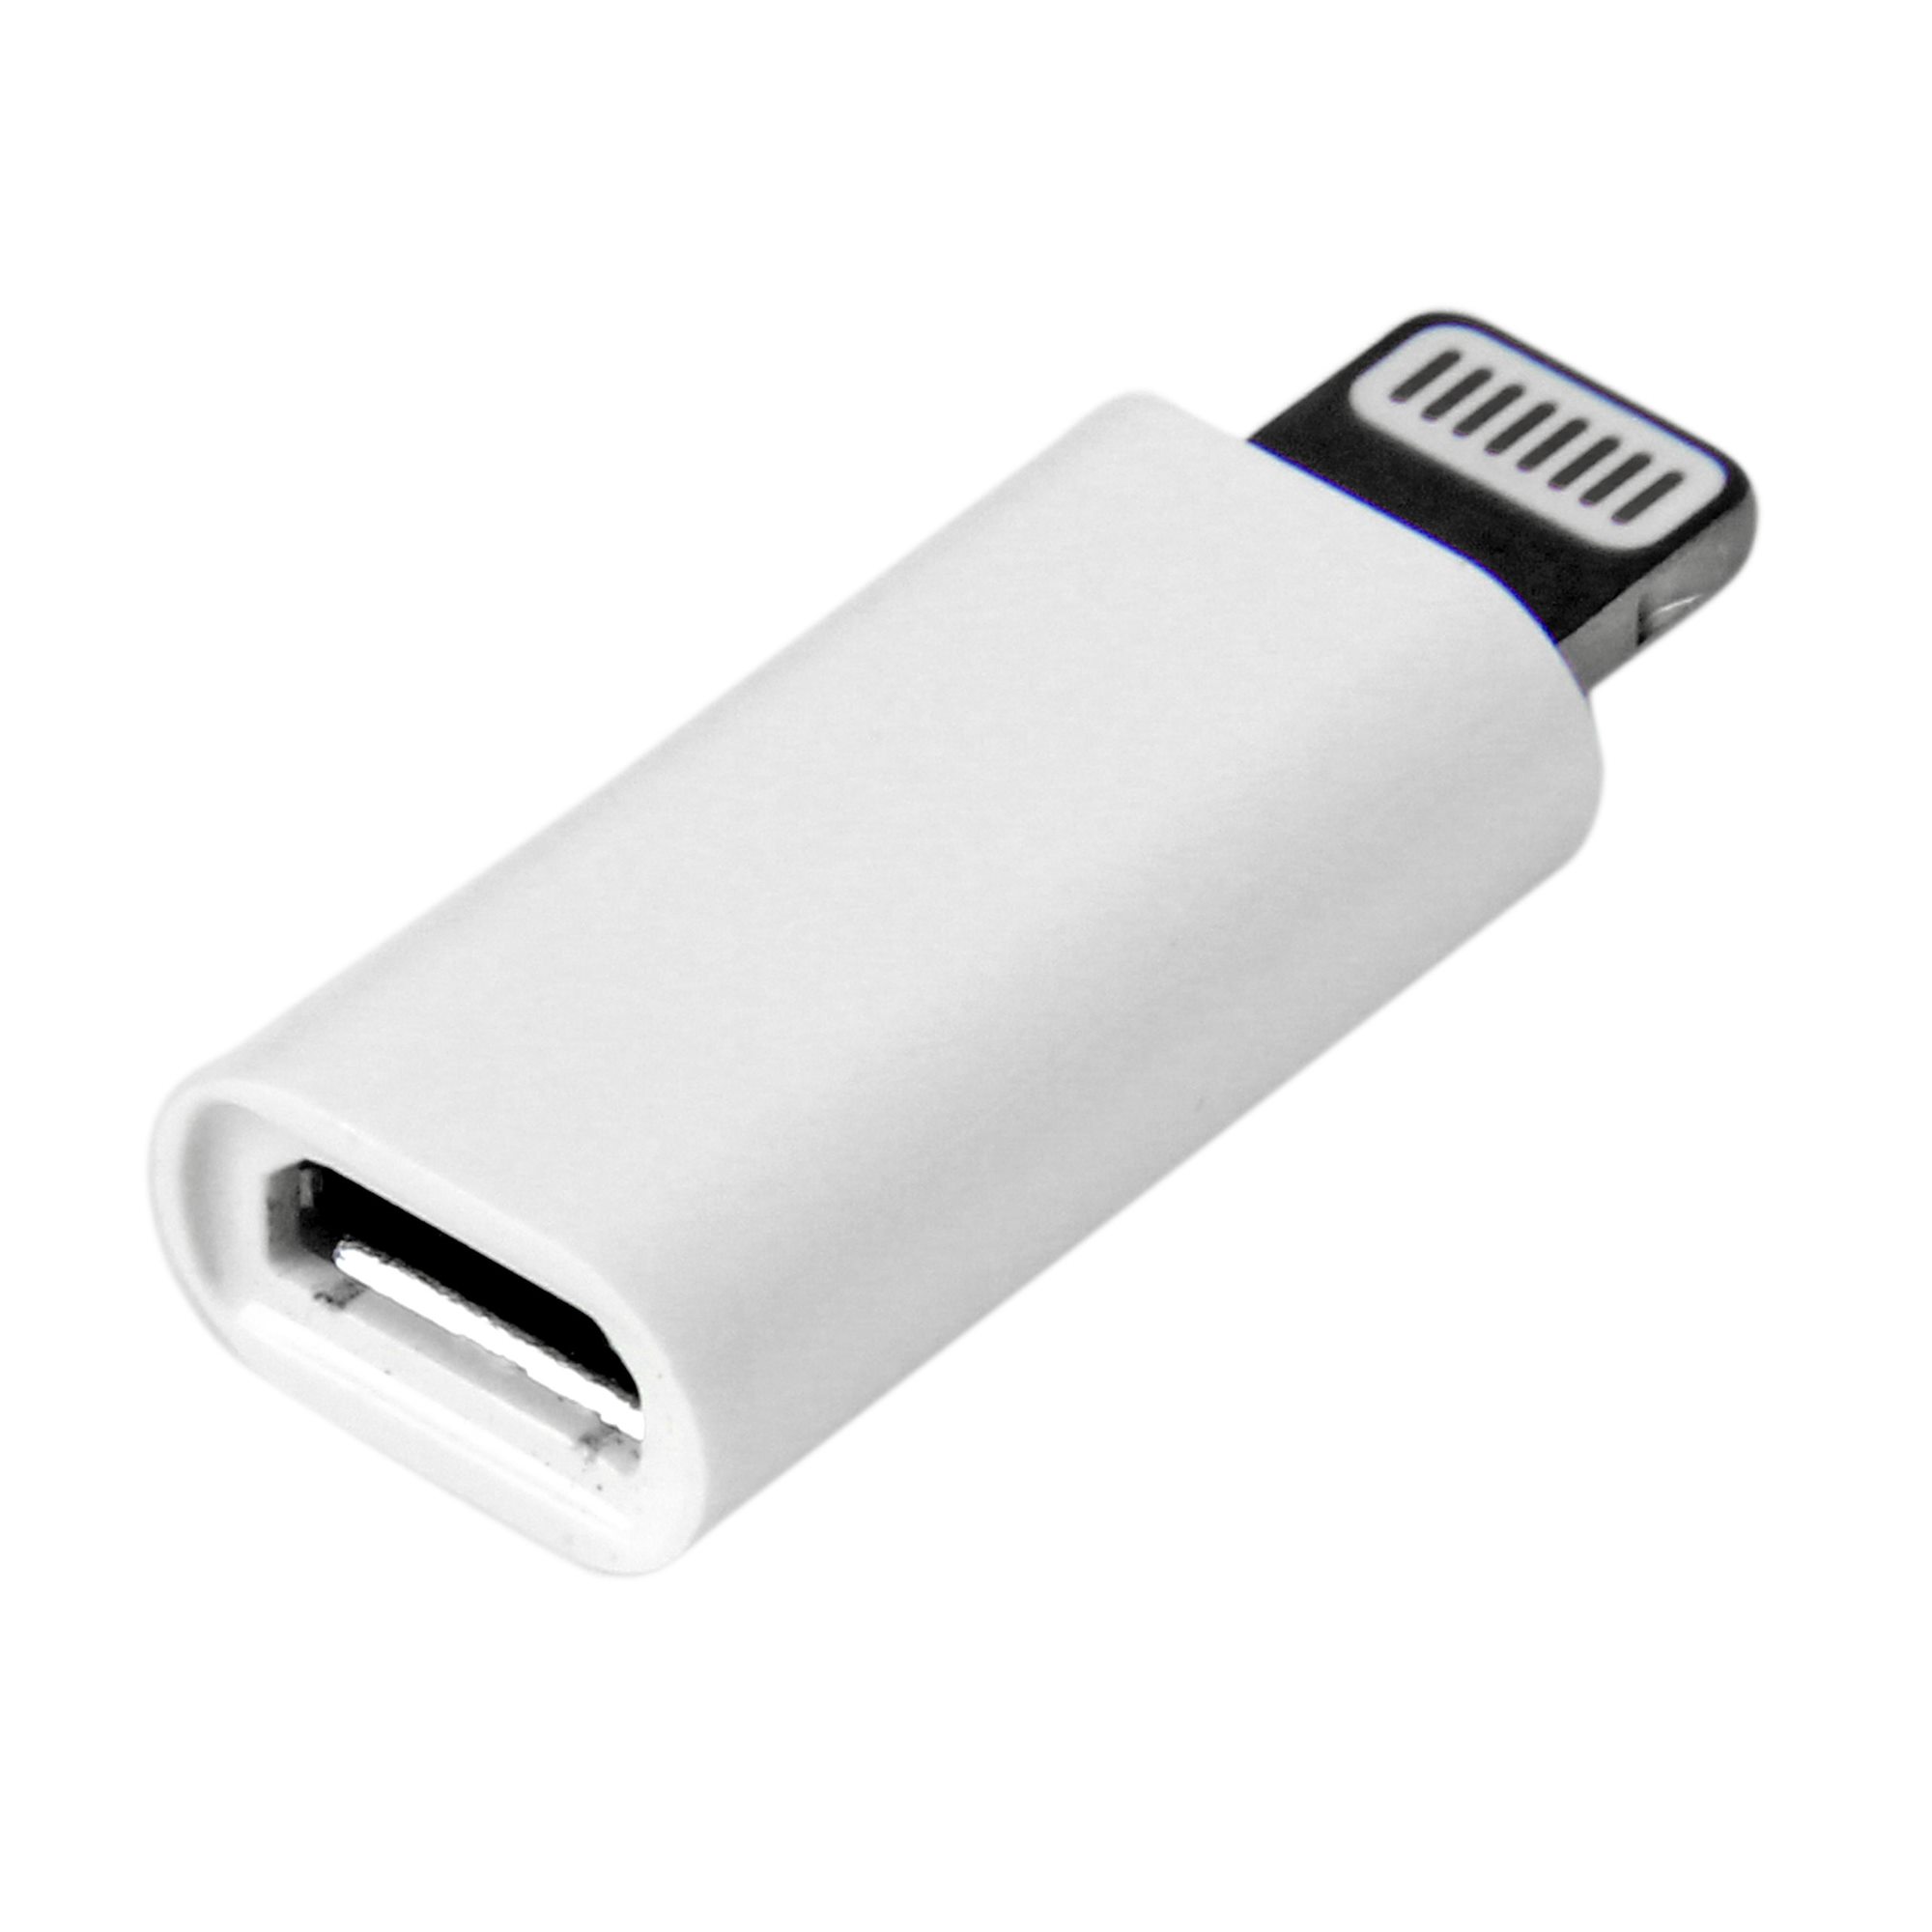 Master diploma Bitterheid heel White Apple Lightning Micro USB Adapter - Lightning Cables | StarTech.com